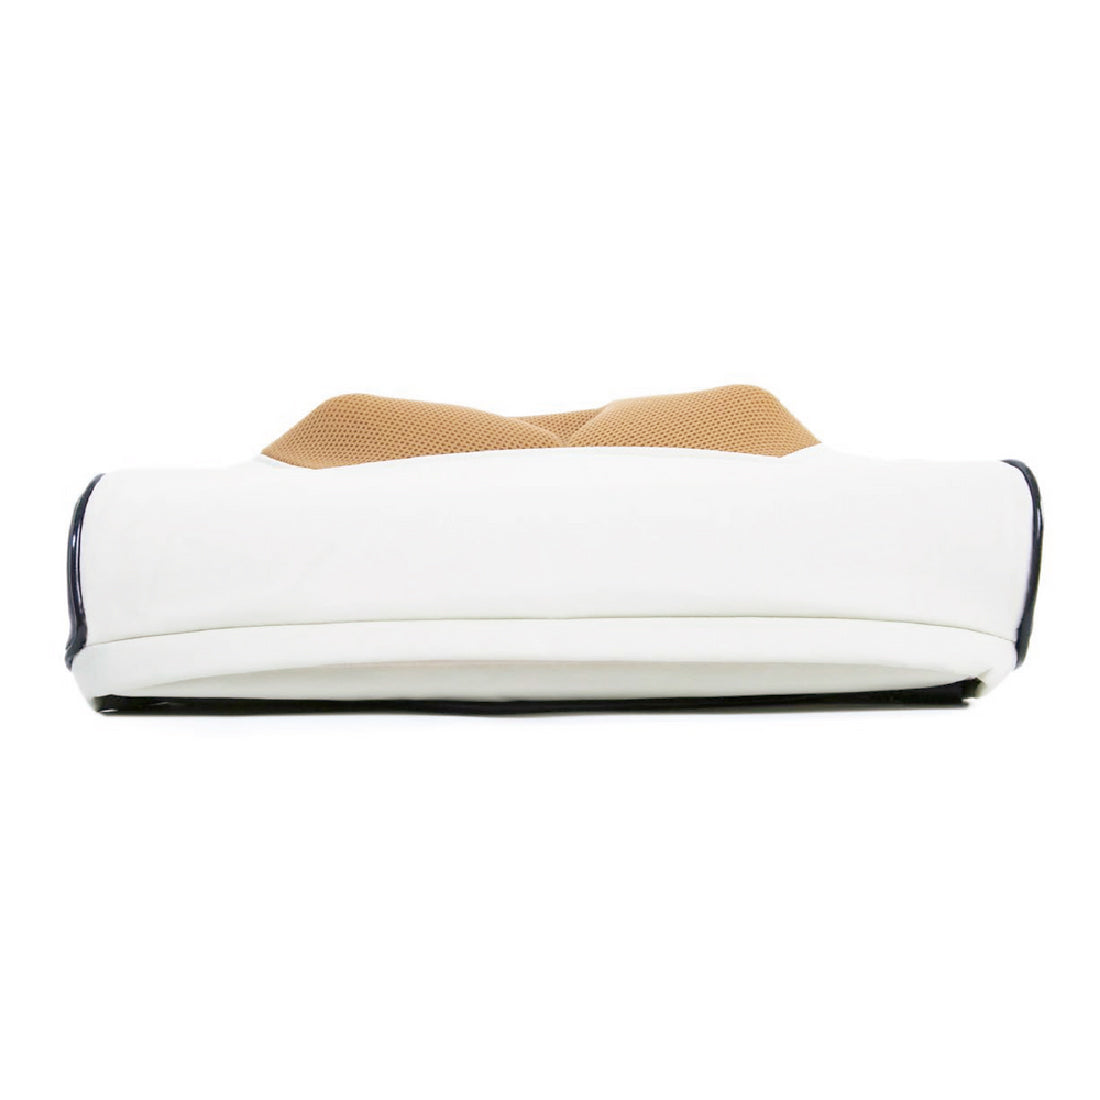 Multifunctional Massage Pillow